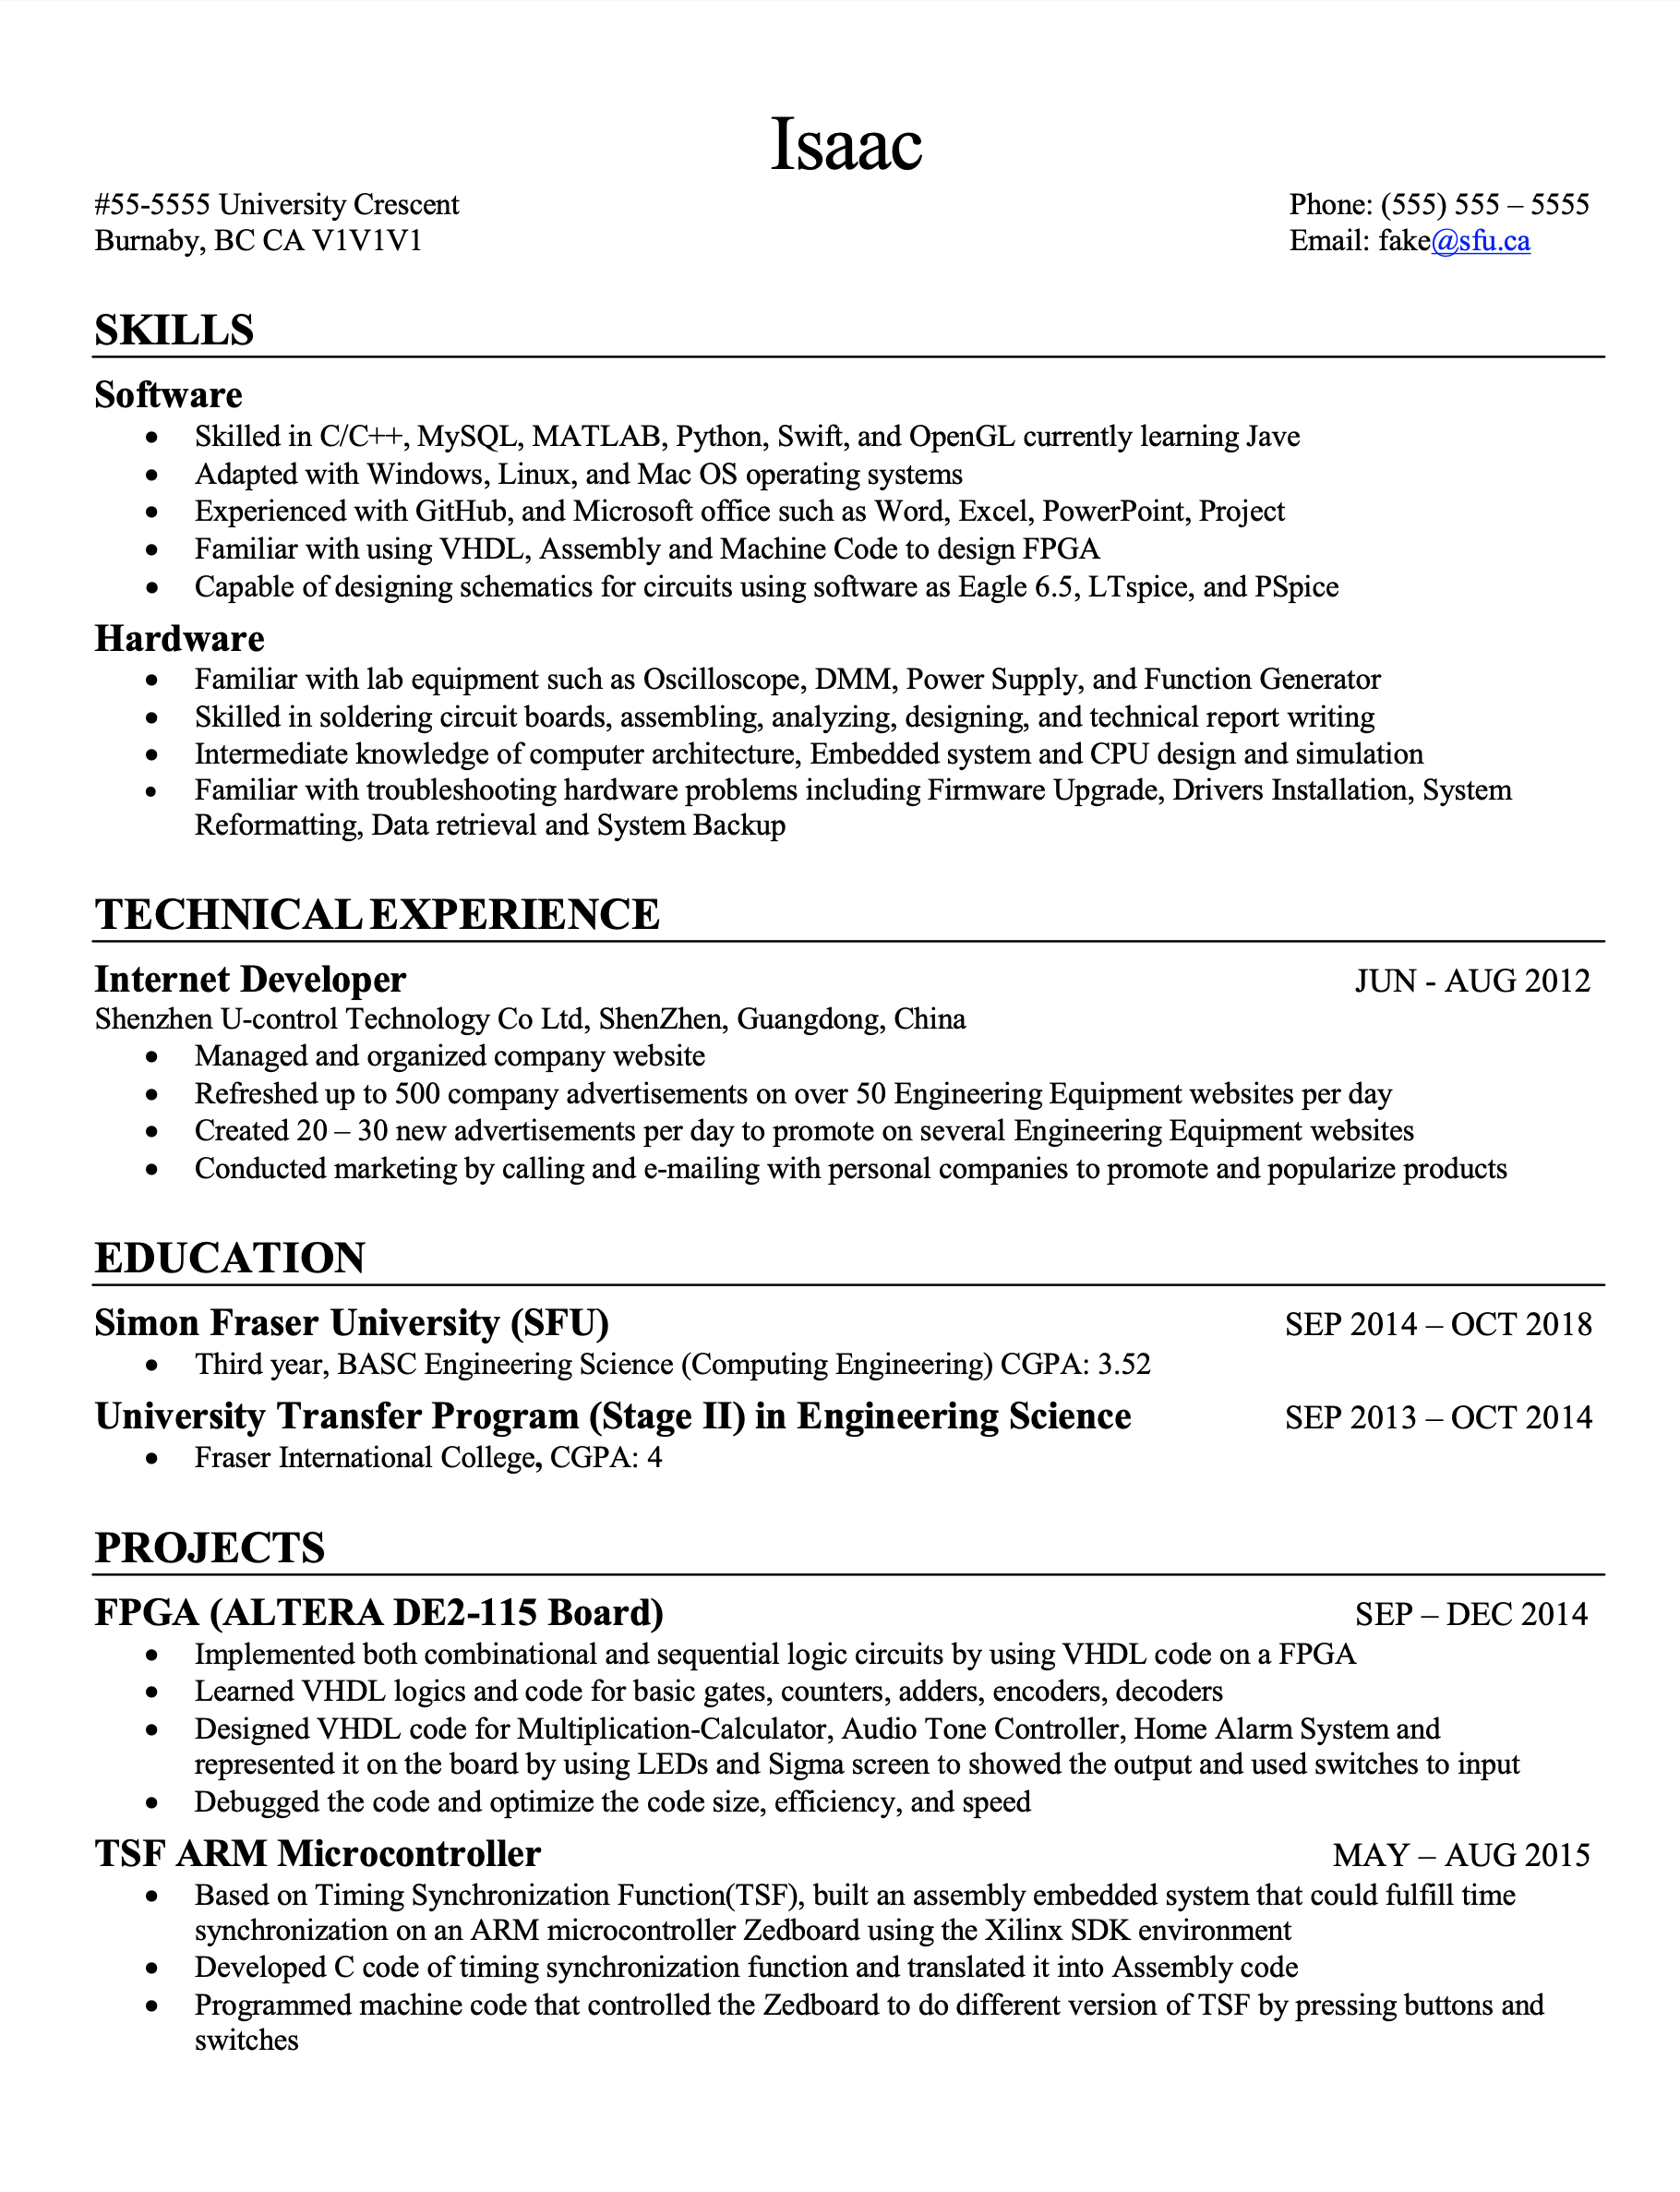 Resume Sample page 1